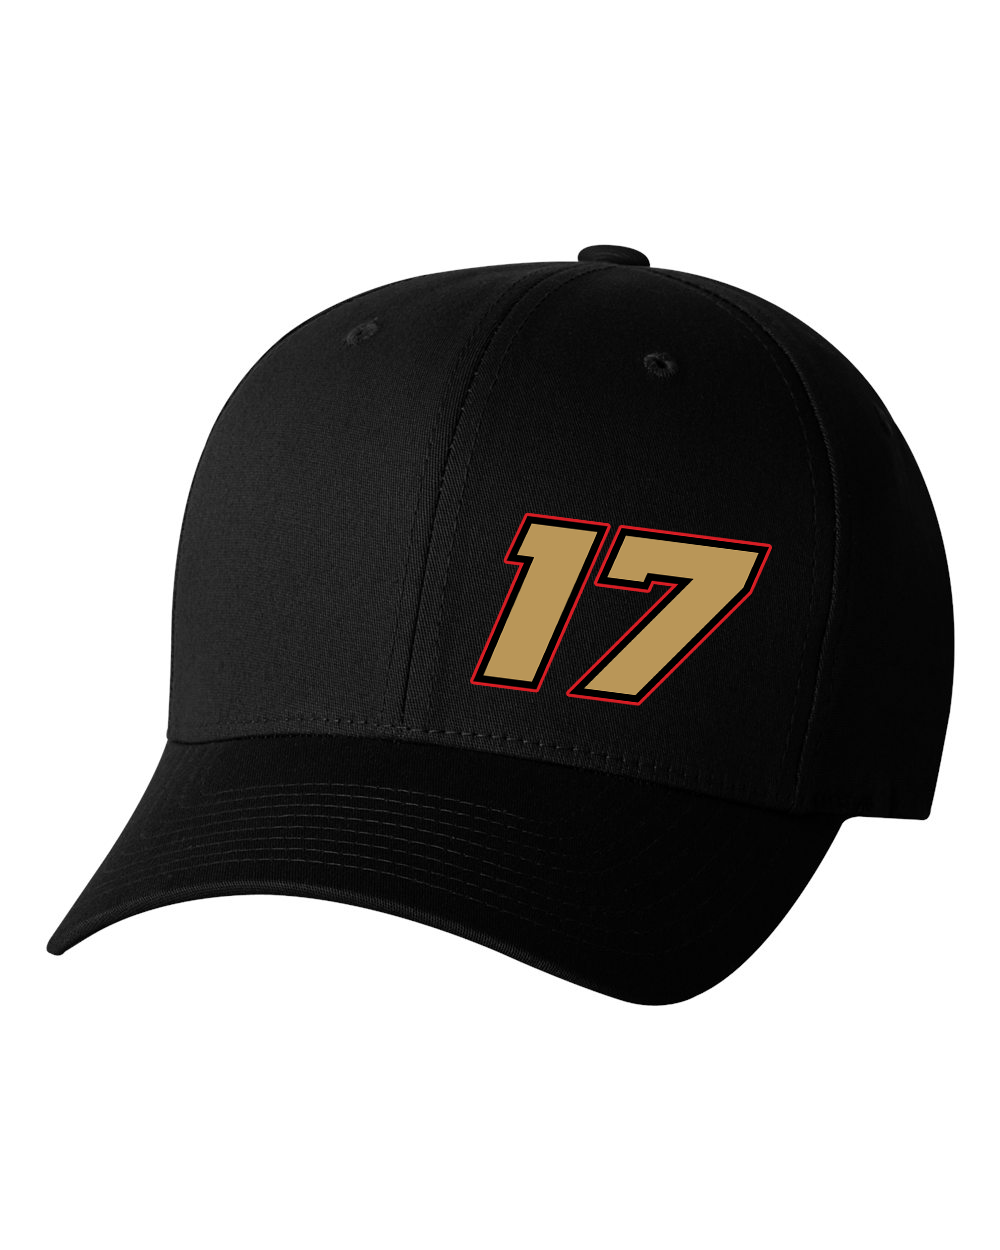 Tom Usry Racing - Kaden Honeycutt Hats Black Acid Apparel